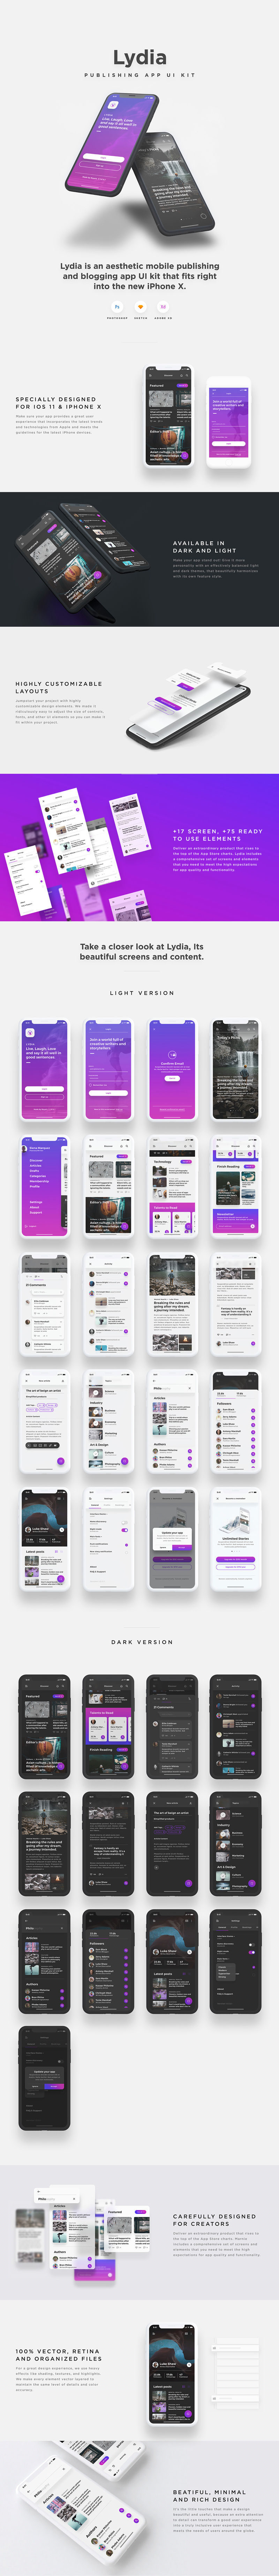 Lydia - Blogging Mobile App UI Kit - Adobe XD UI Kit Beispiel